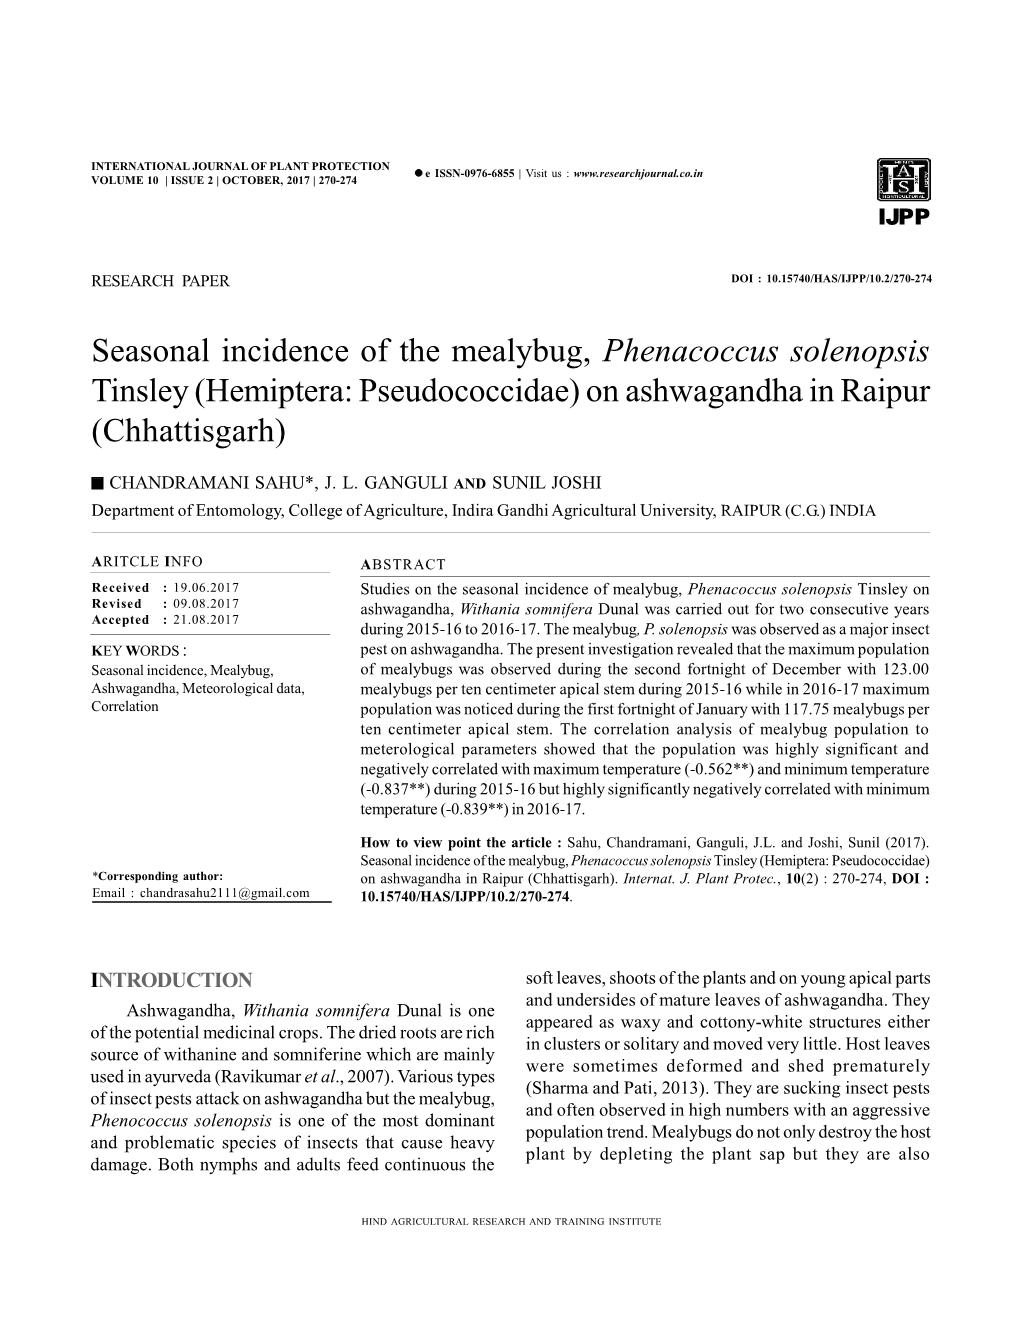 Seasonal Incidence of the Mealybug, Phenacoccus Solenopsis Tinsley (Hemiptera: Pseudococcidae) on Ashwagandha in Raipur (Chhattisgarh)